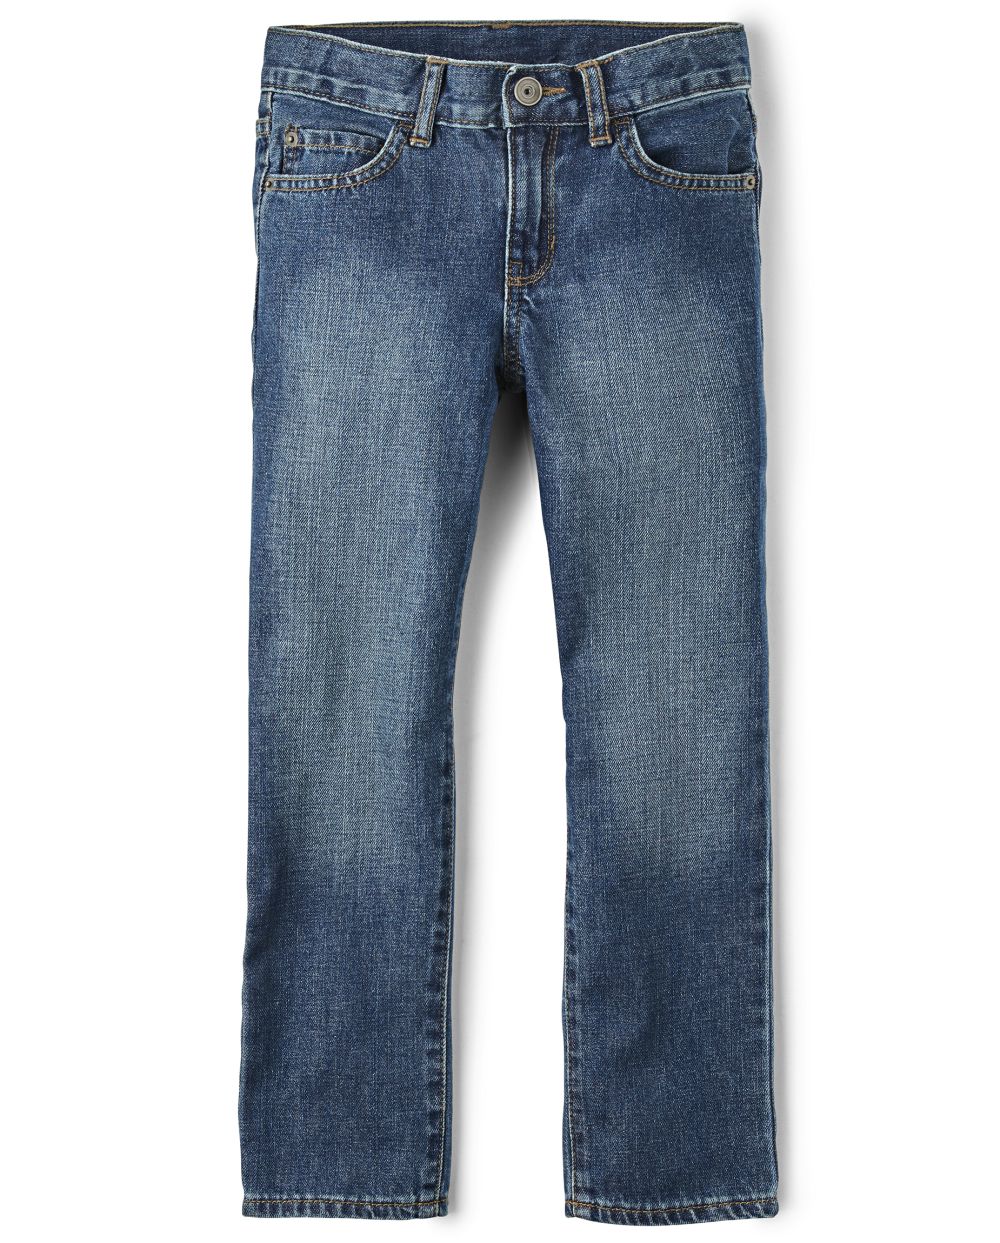 Boys Basic Bootcut Jeans - Medium Blue Indigo Wash